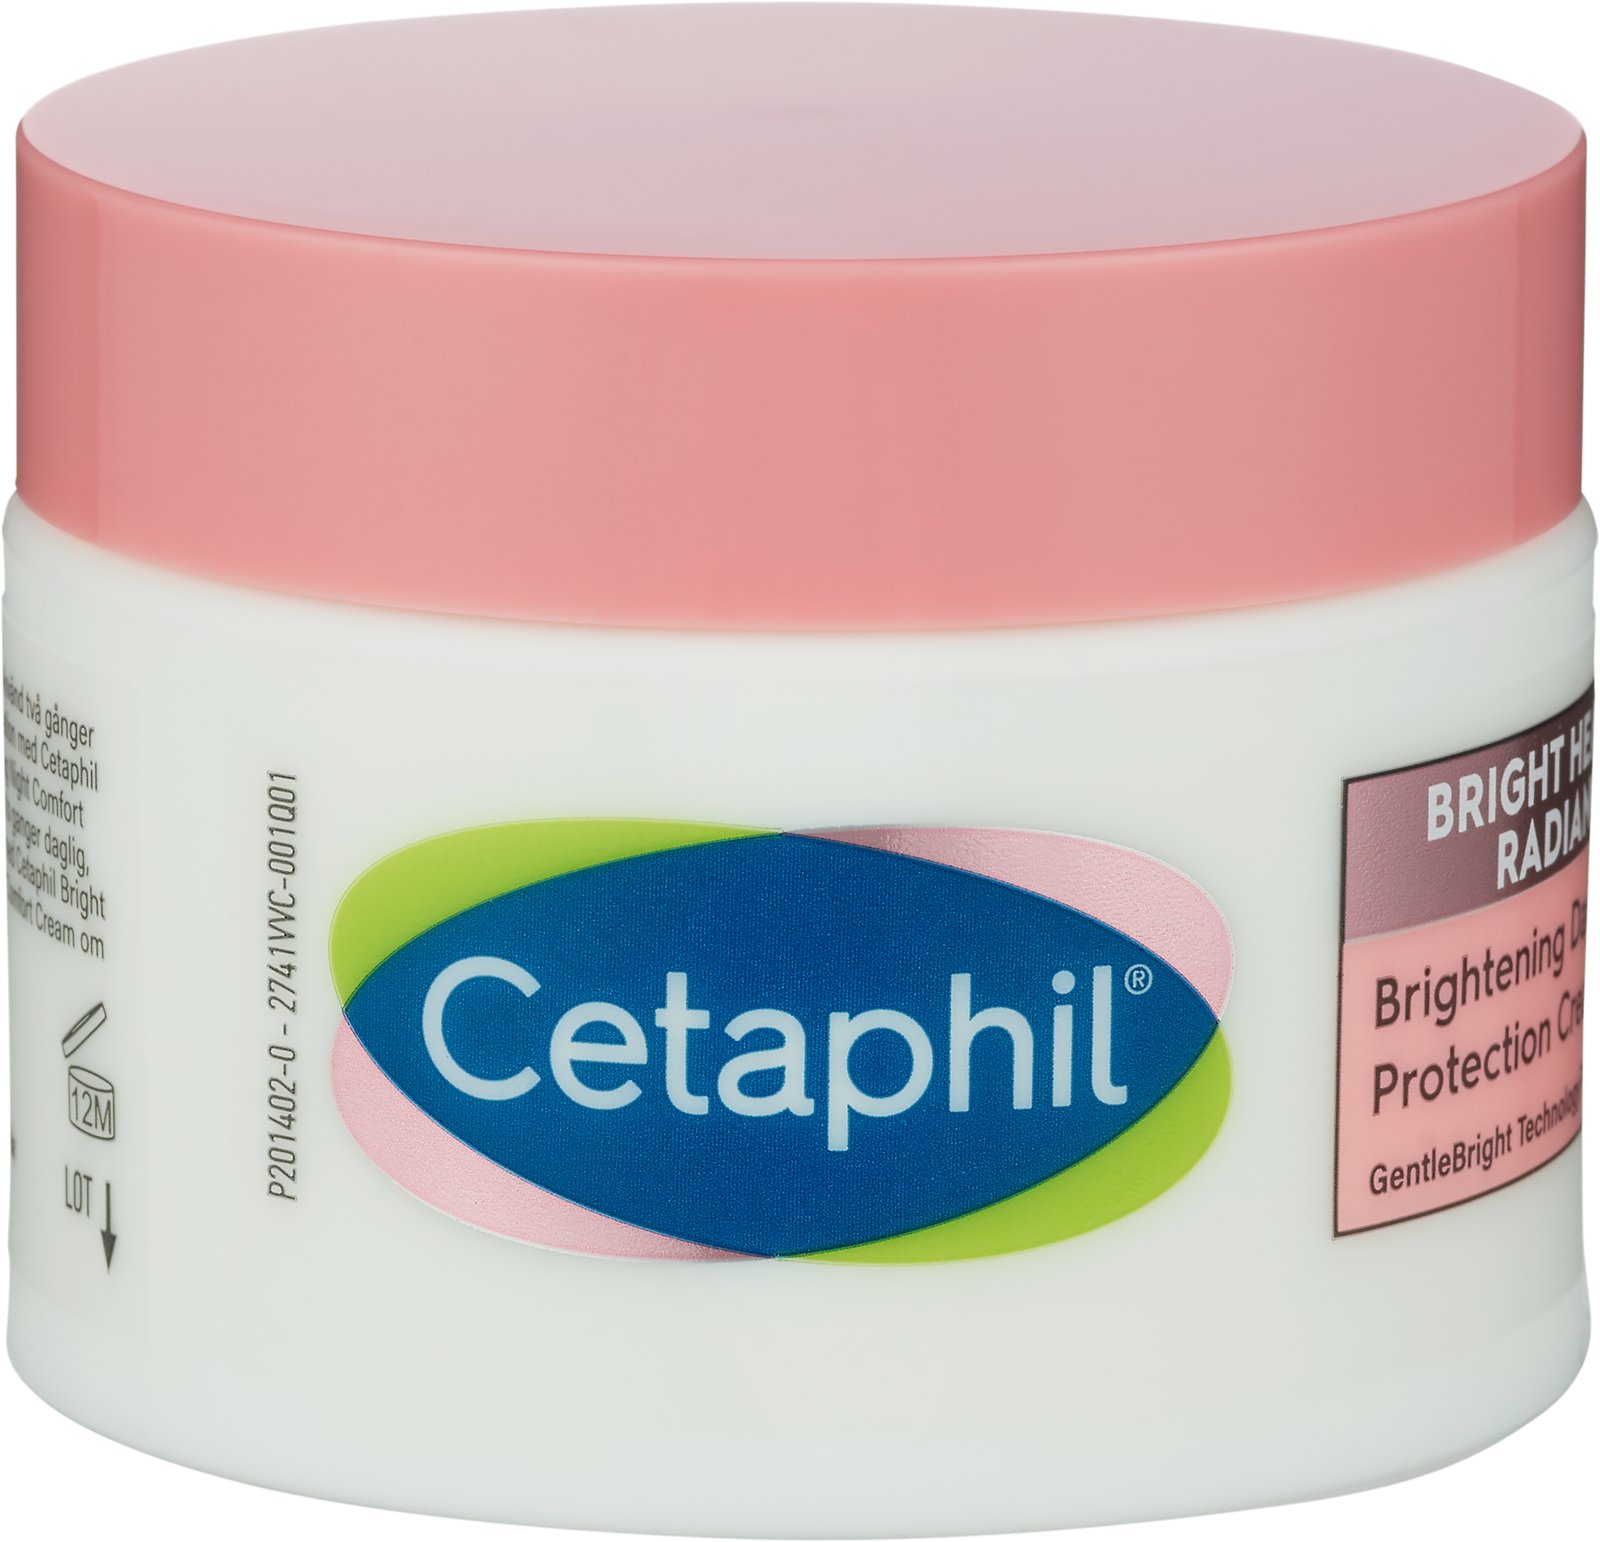 Cetaphil Healthy Radiance SPF15 Brightening Day Protection Cream 50 g